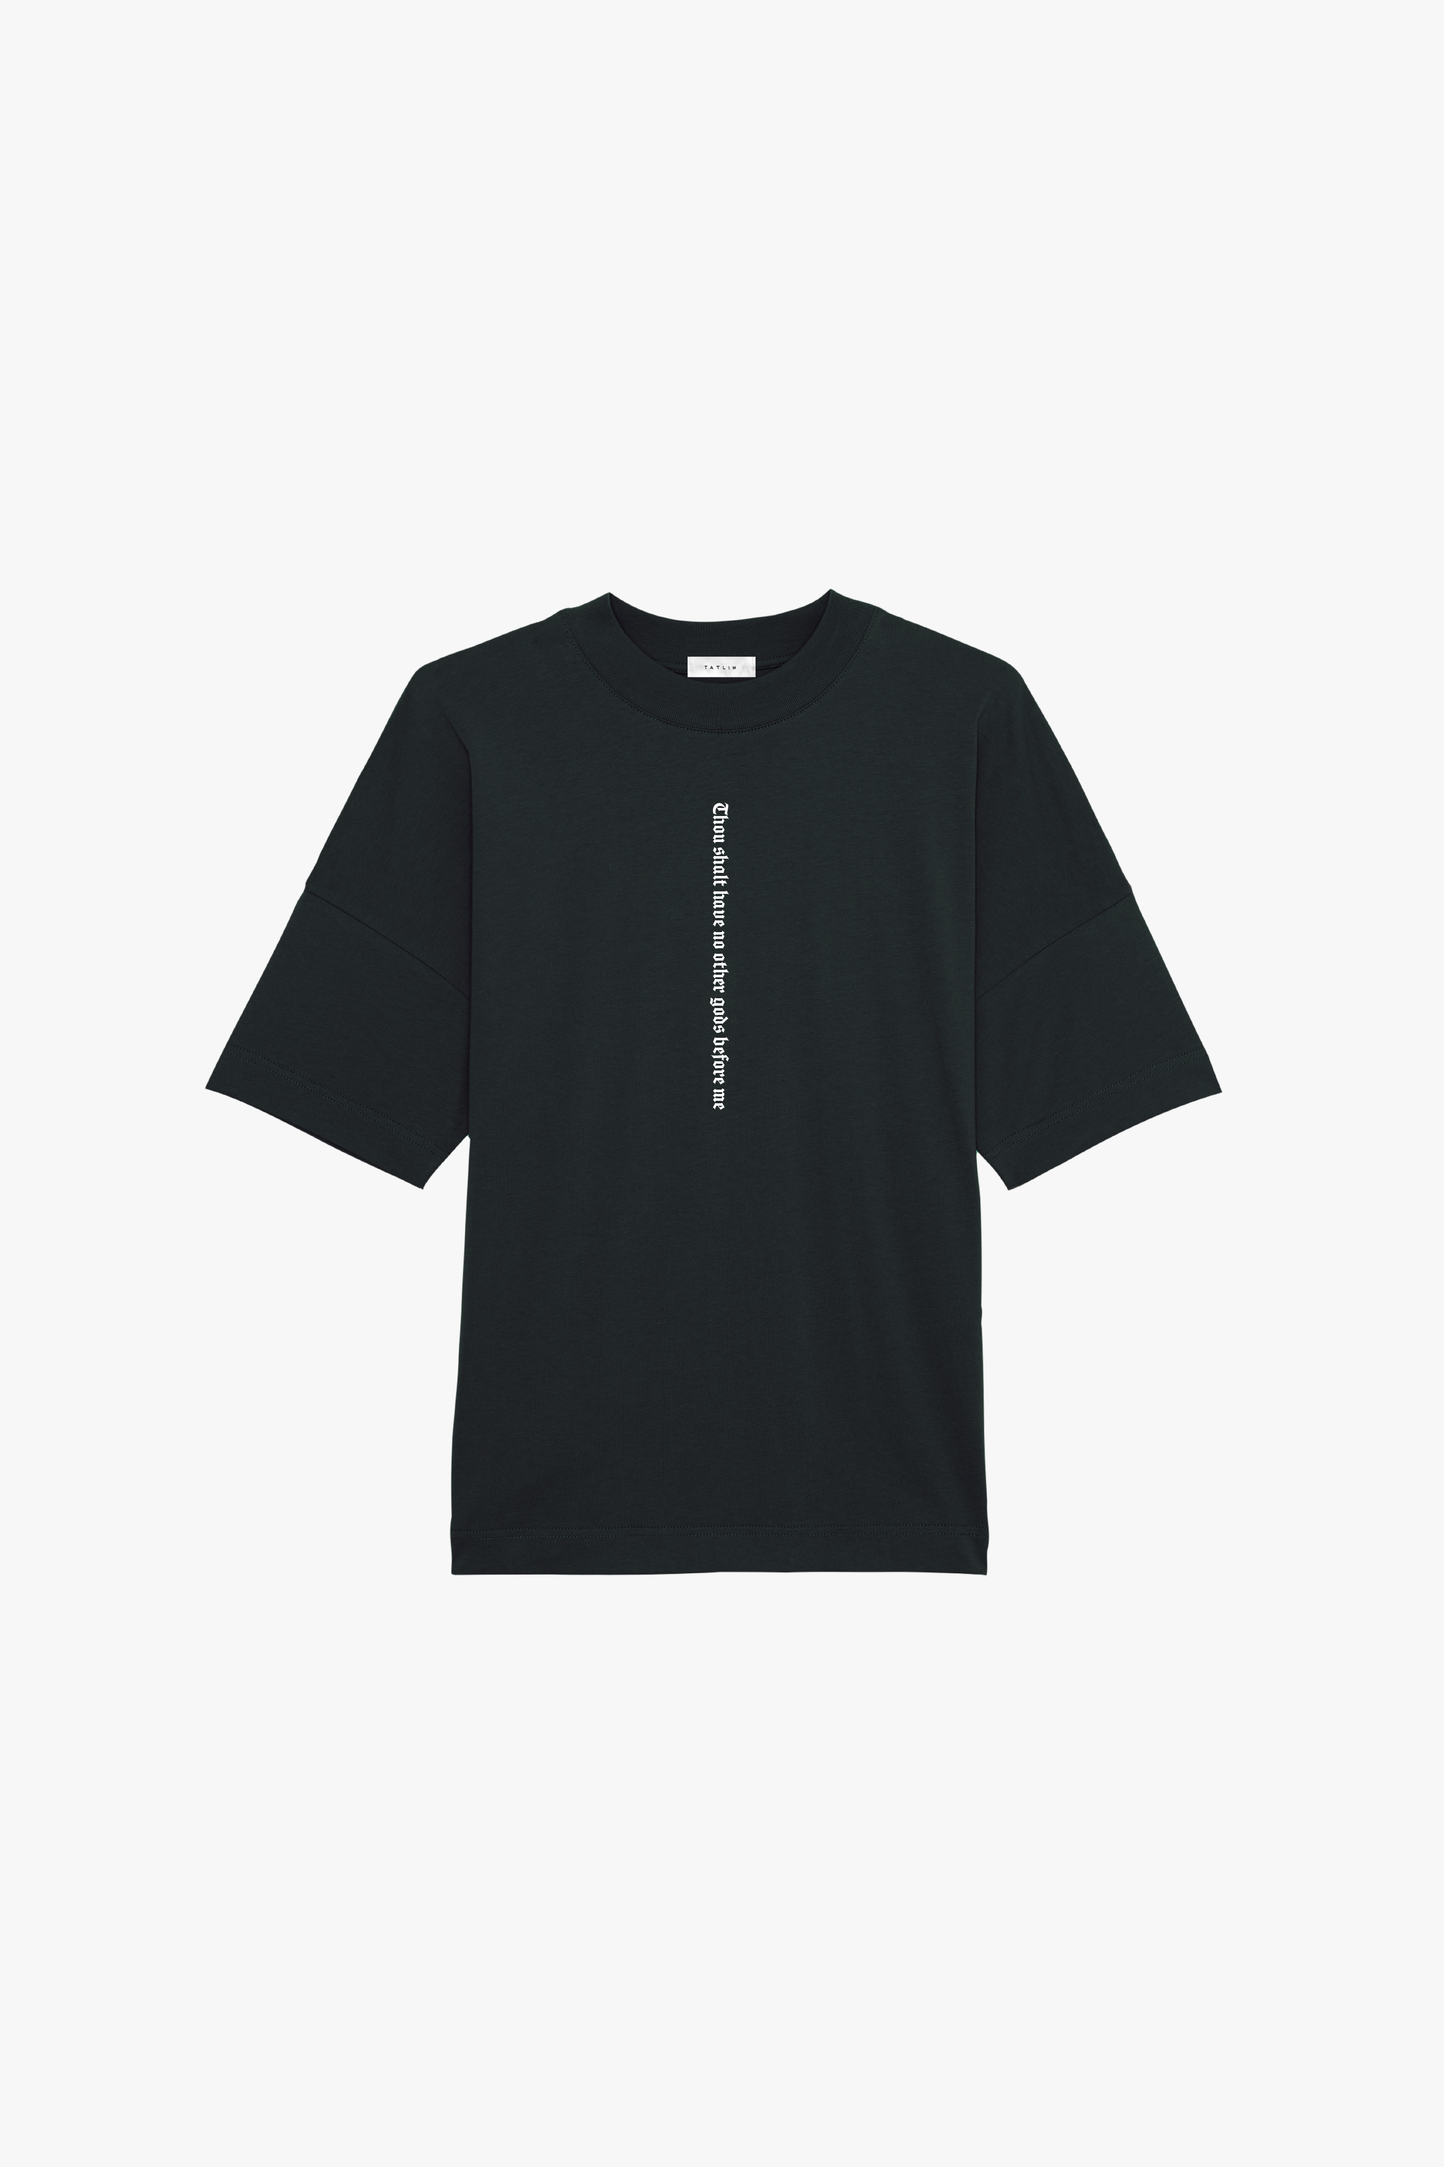 Black Oversized 10 C's T Shirt